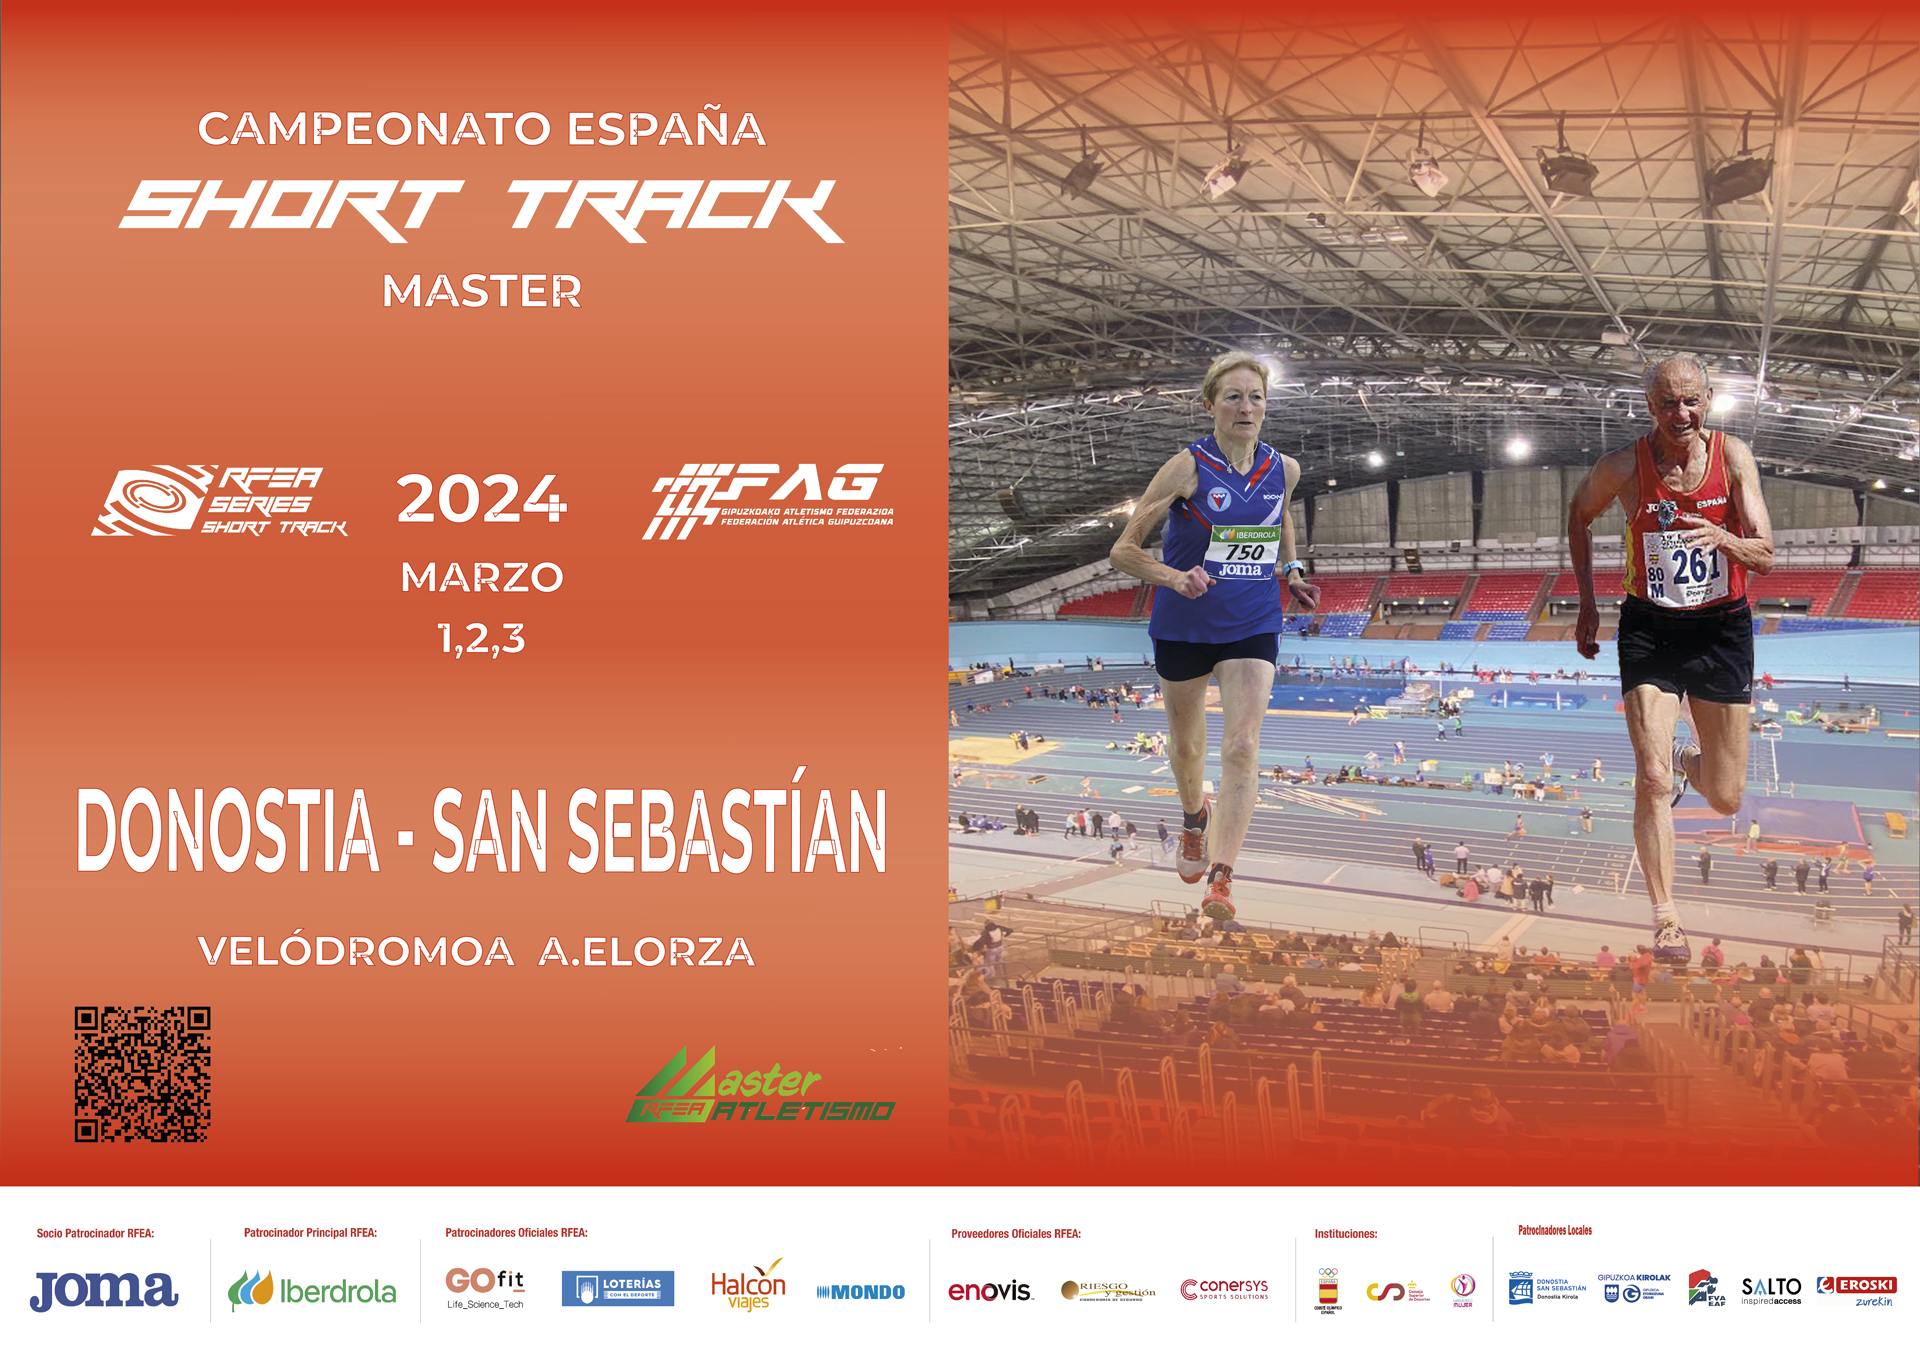 Campeonato de España Master Short Track